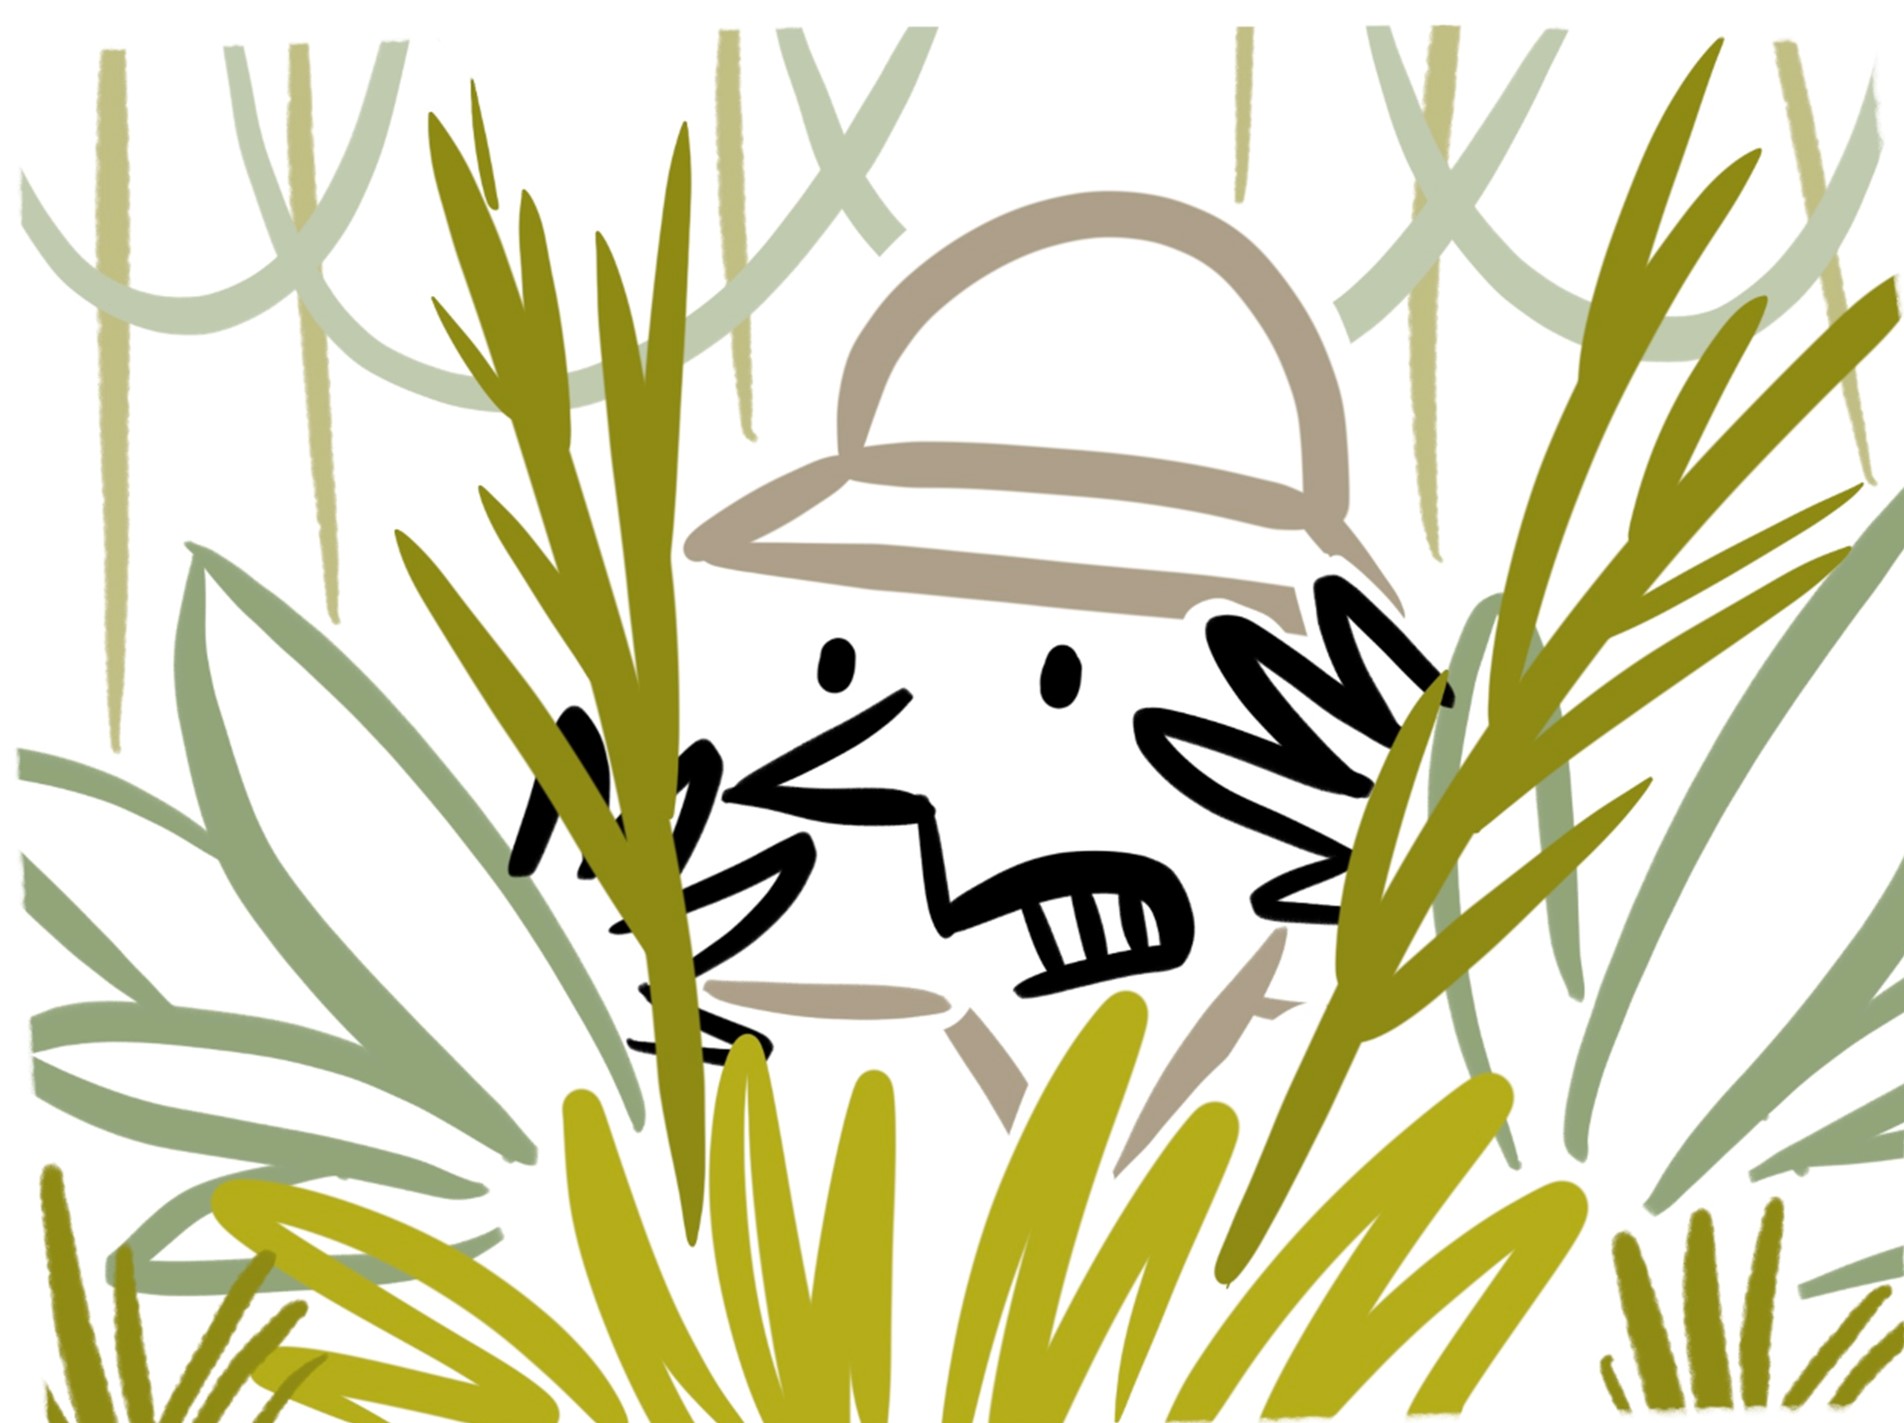 Man in a safari hat peering through long grass. 